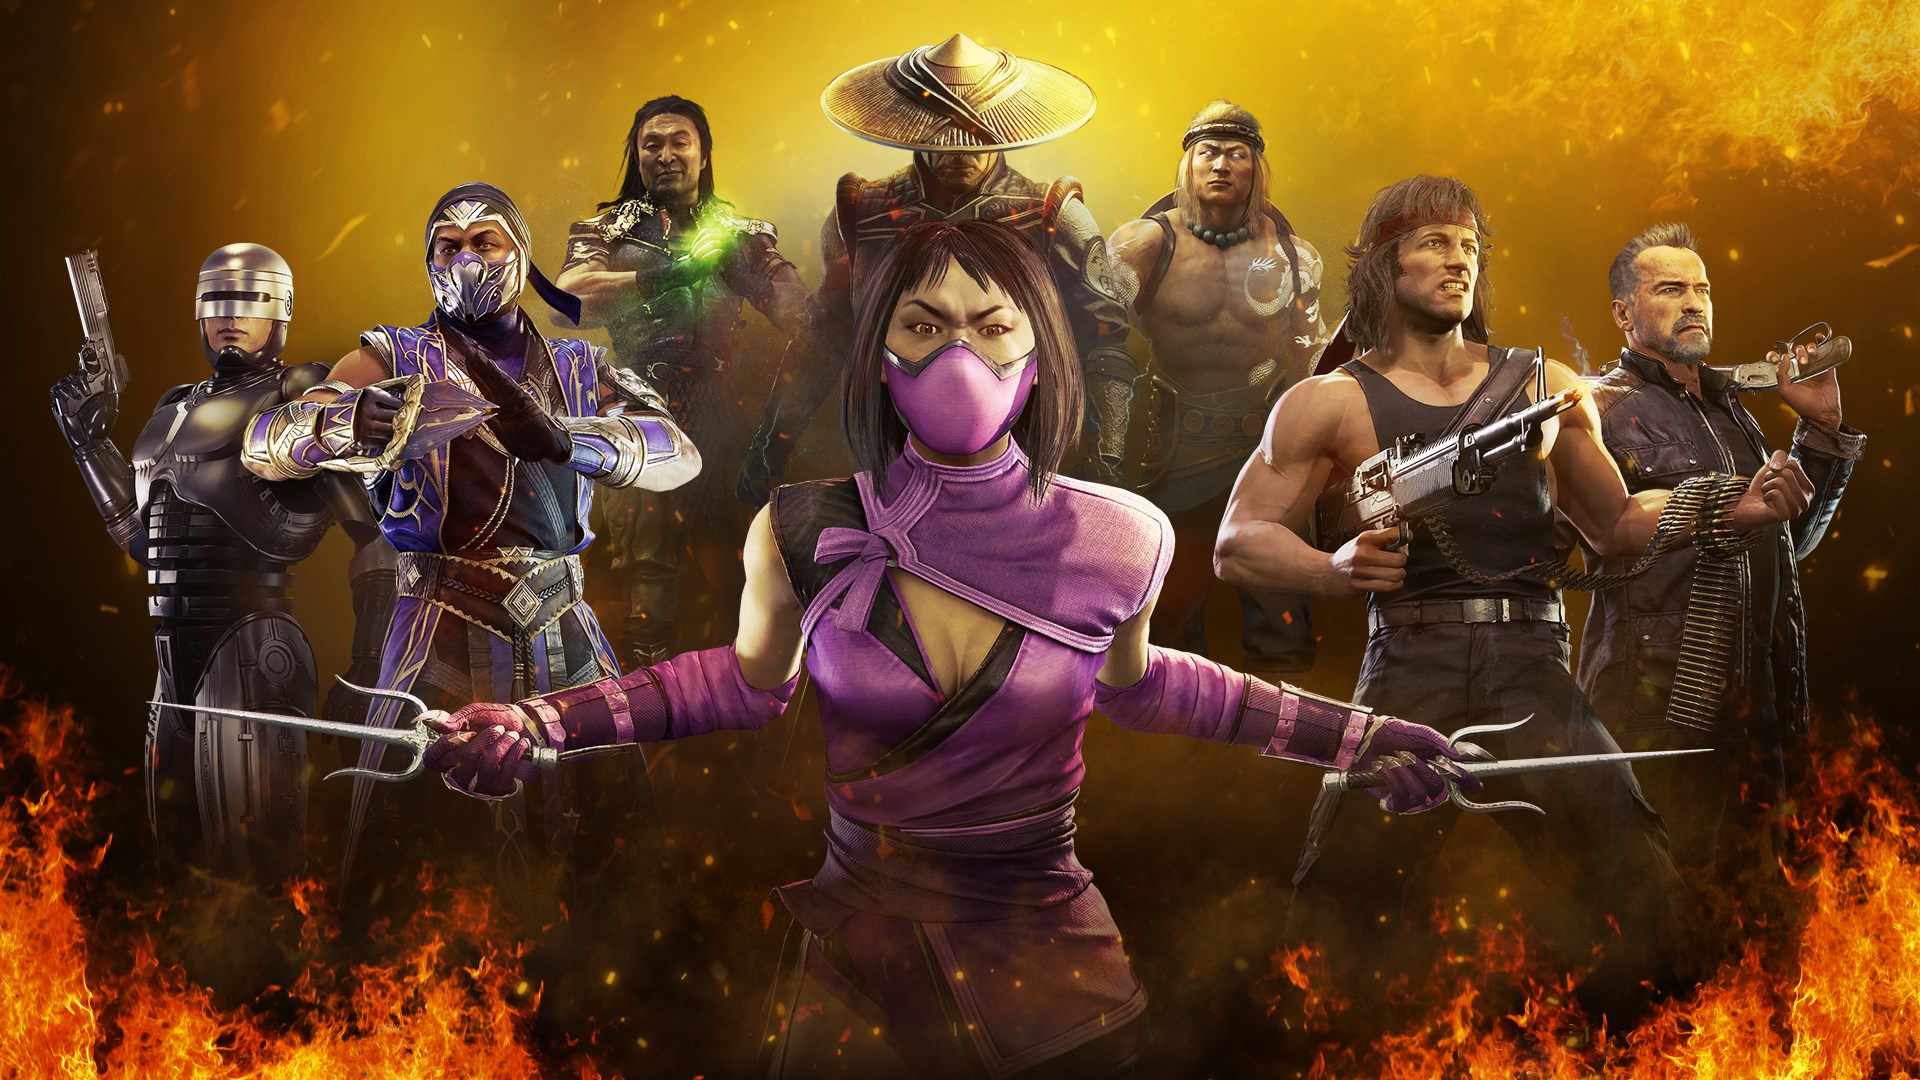 Mortal Kombat 11 - Download for PC Free